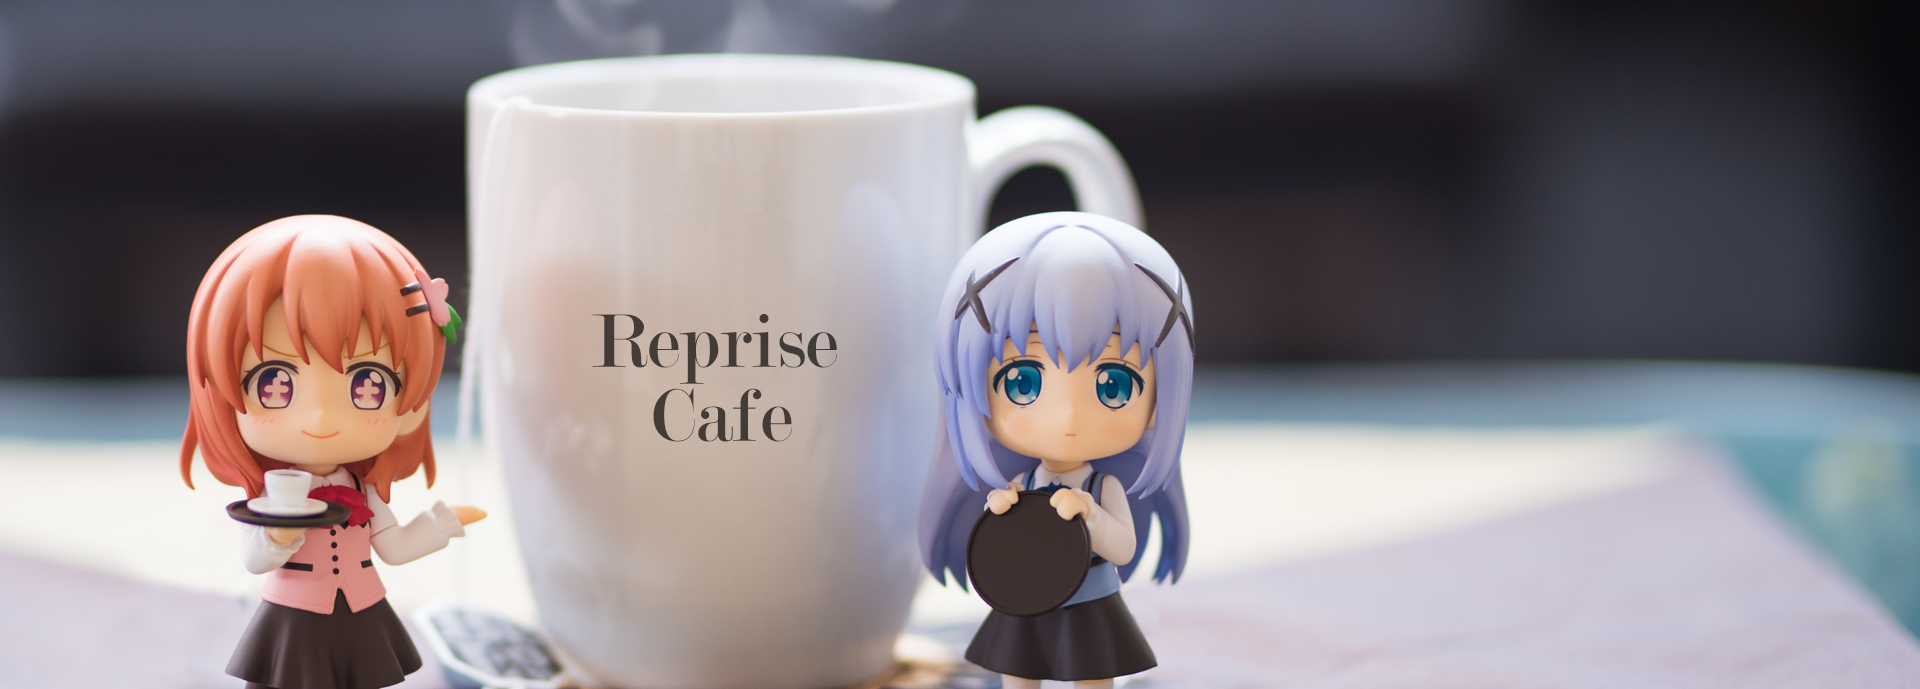 Reprise Cafe